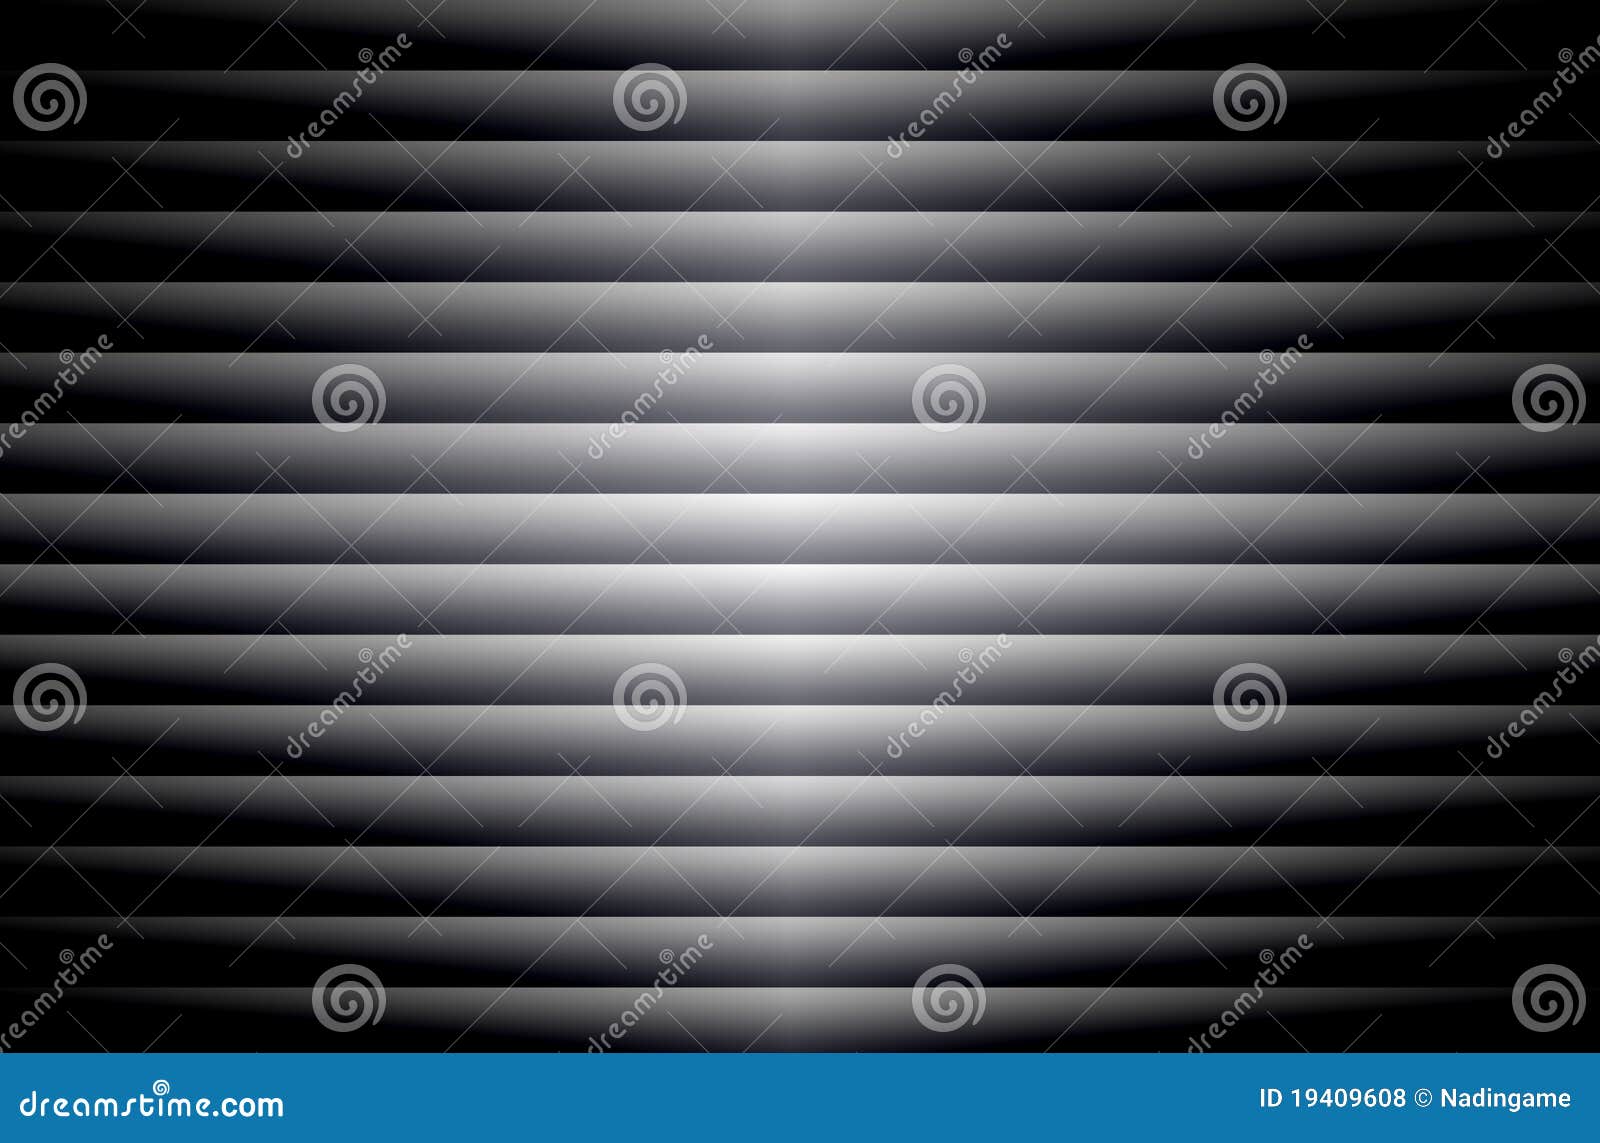 horizontal stripes background